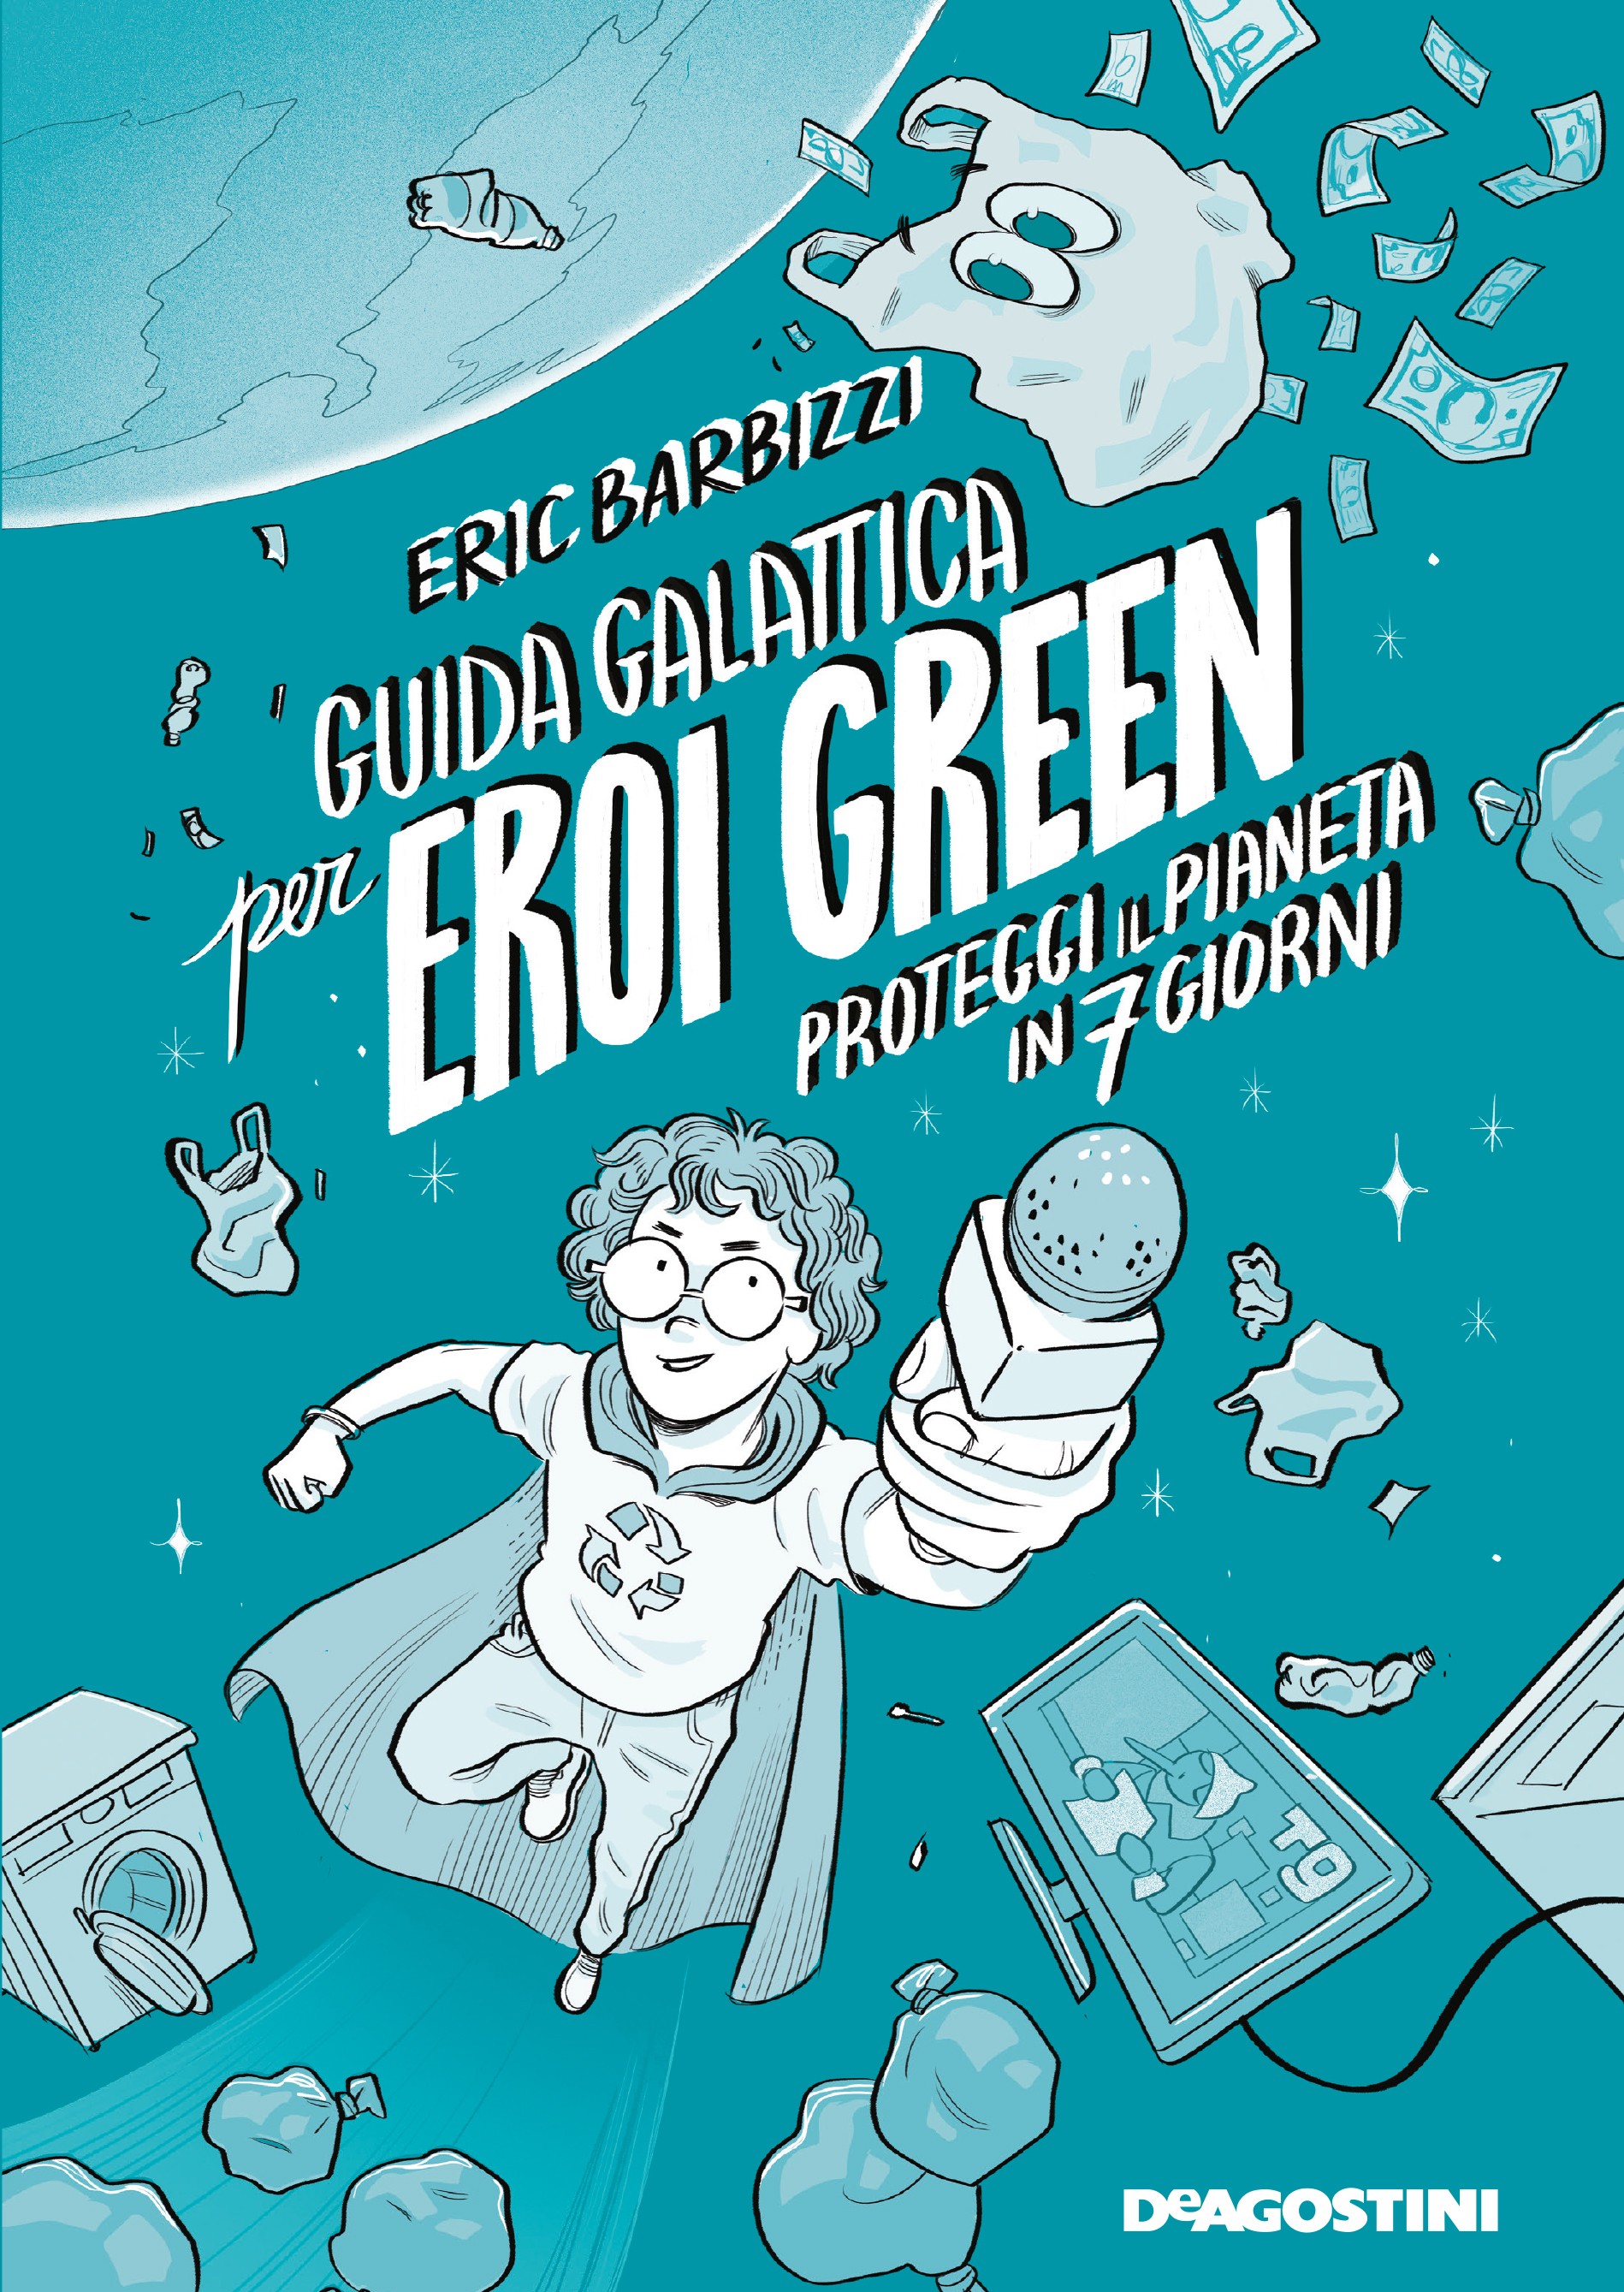 Guida galattica per eroi green - Librerie.coop